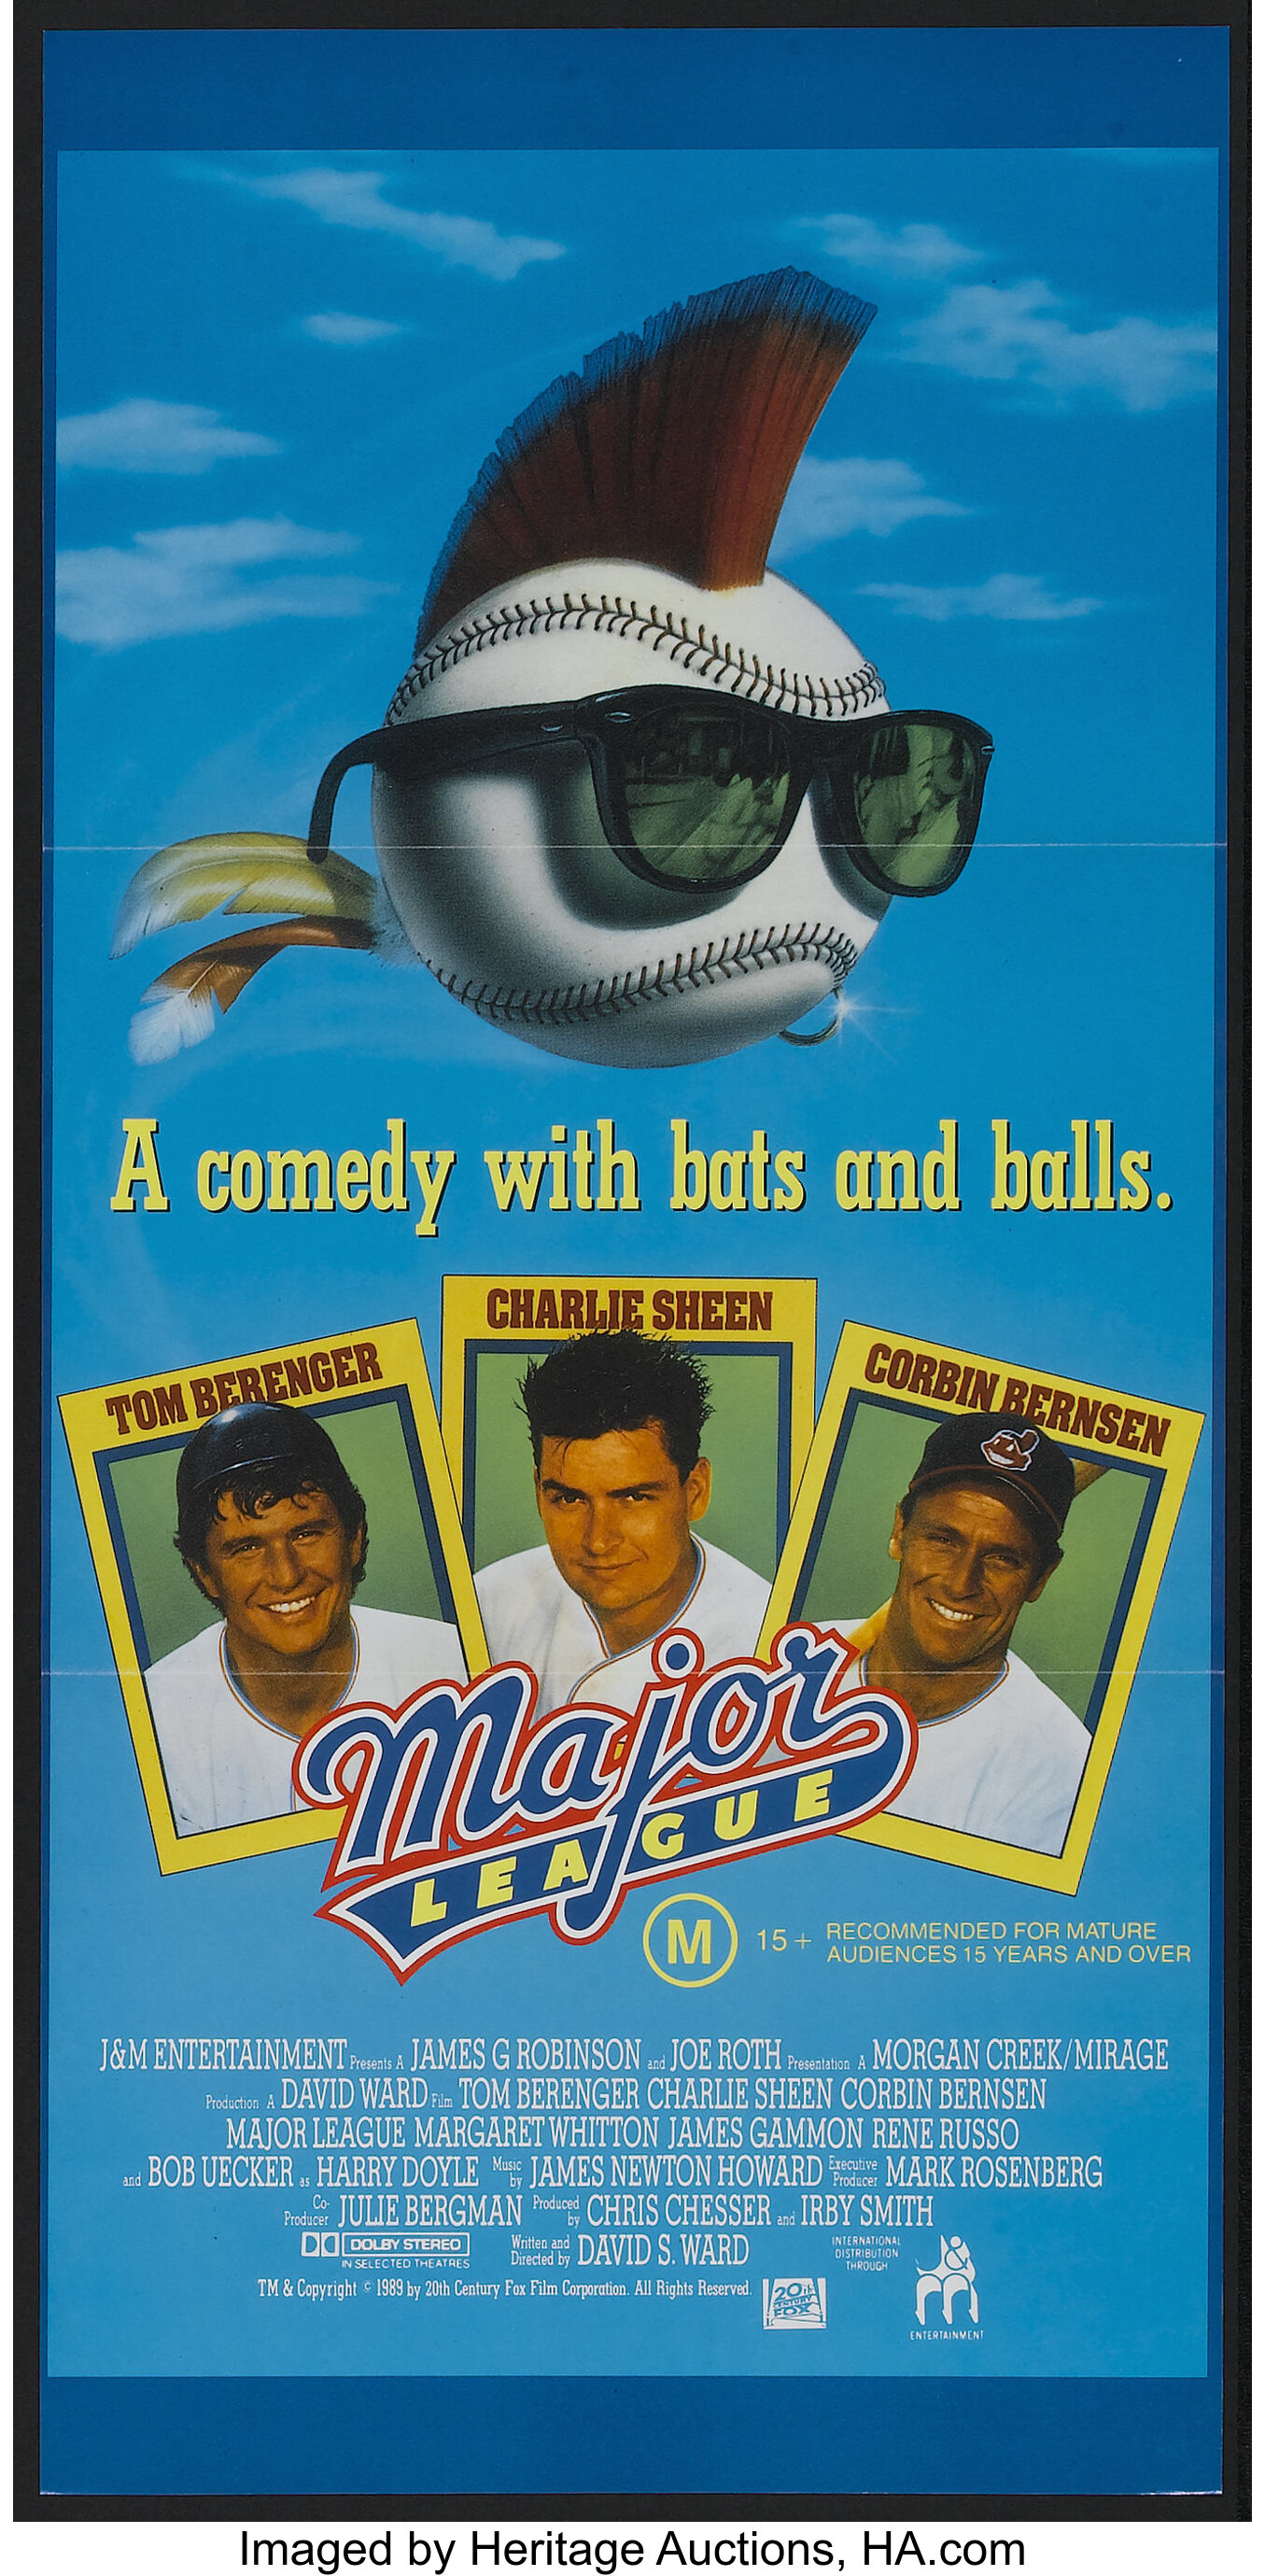 Major League (1989)